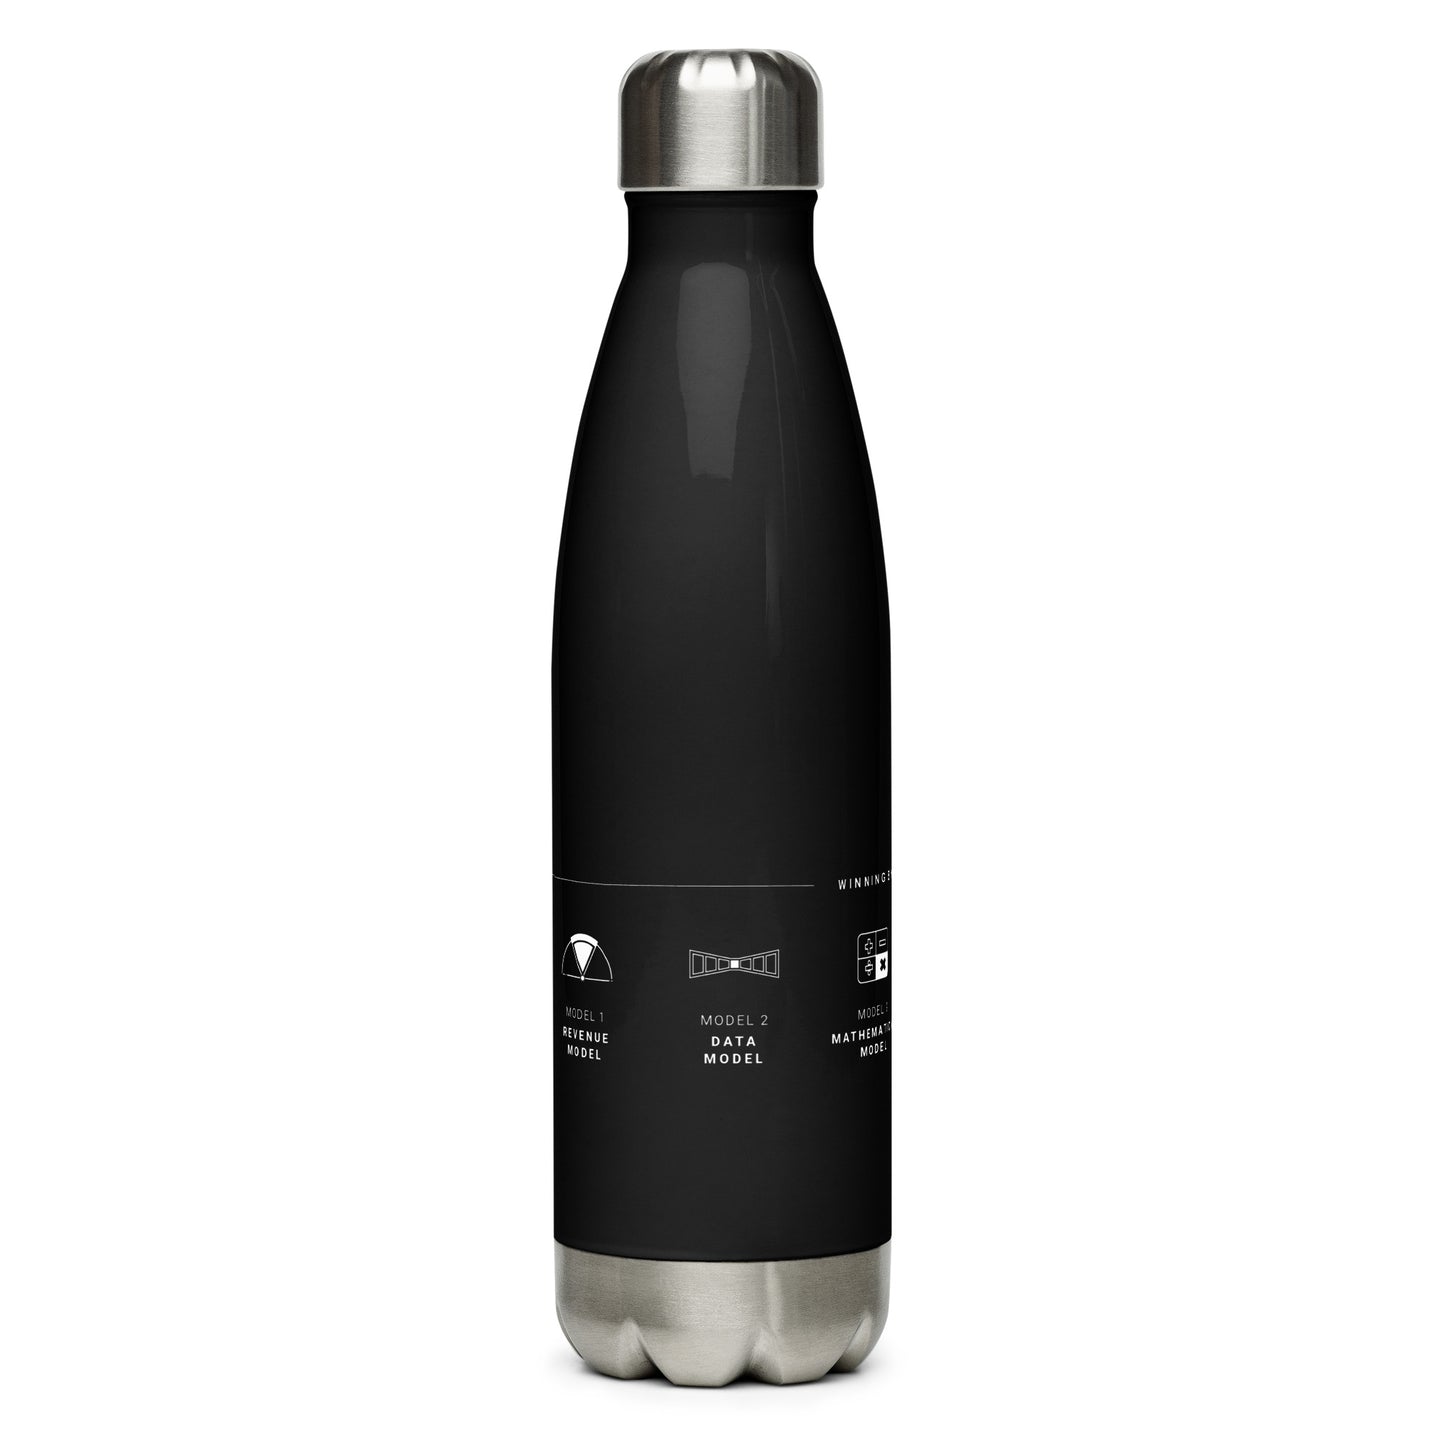 Revenue Architect Stainless Steel Water Bottle